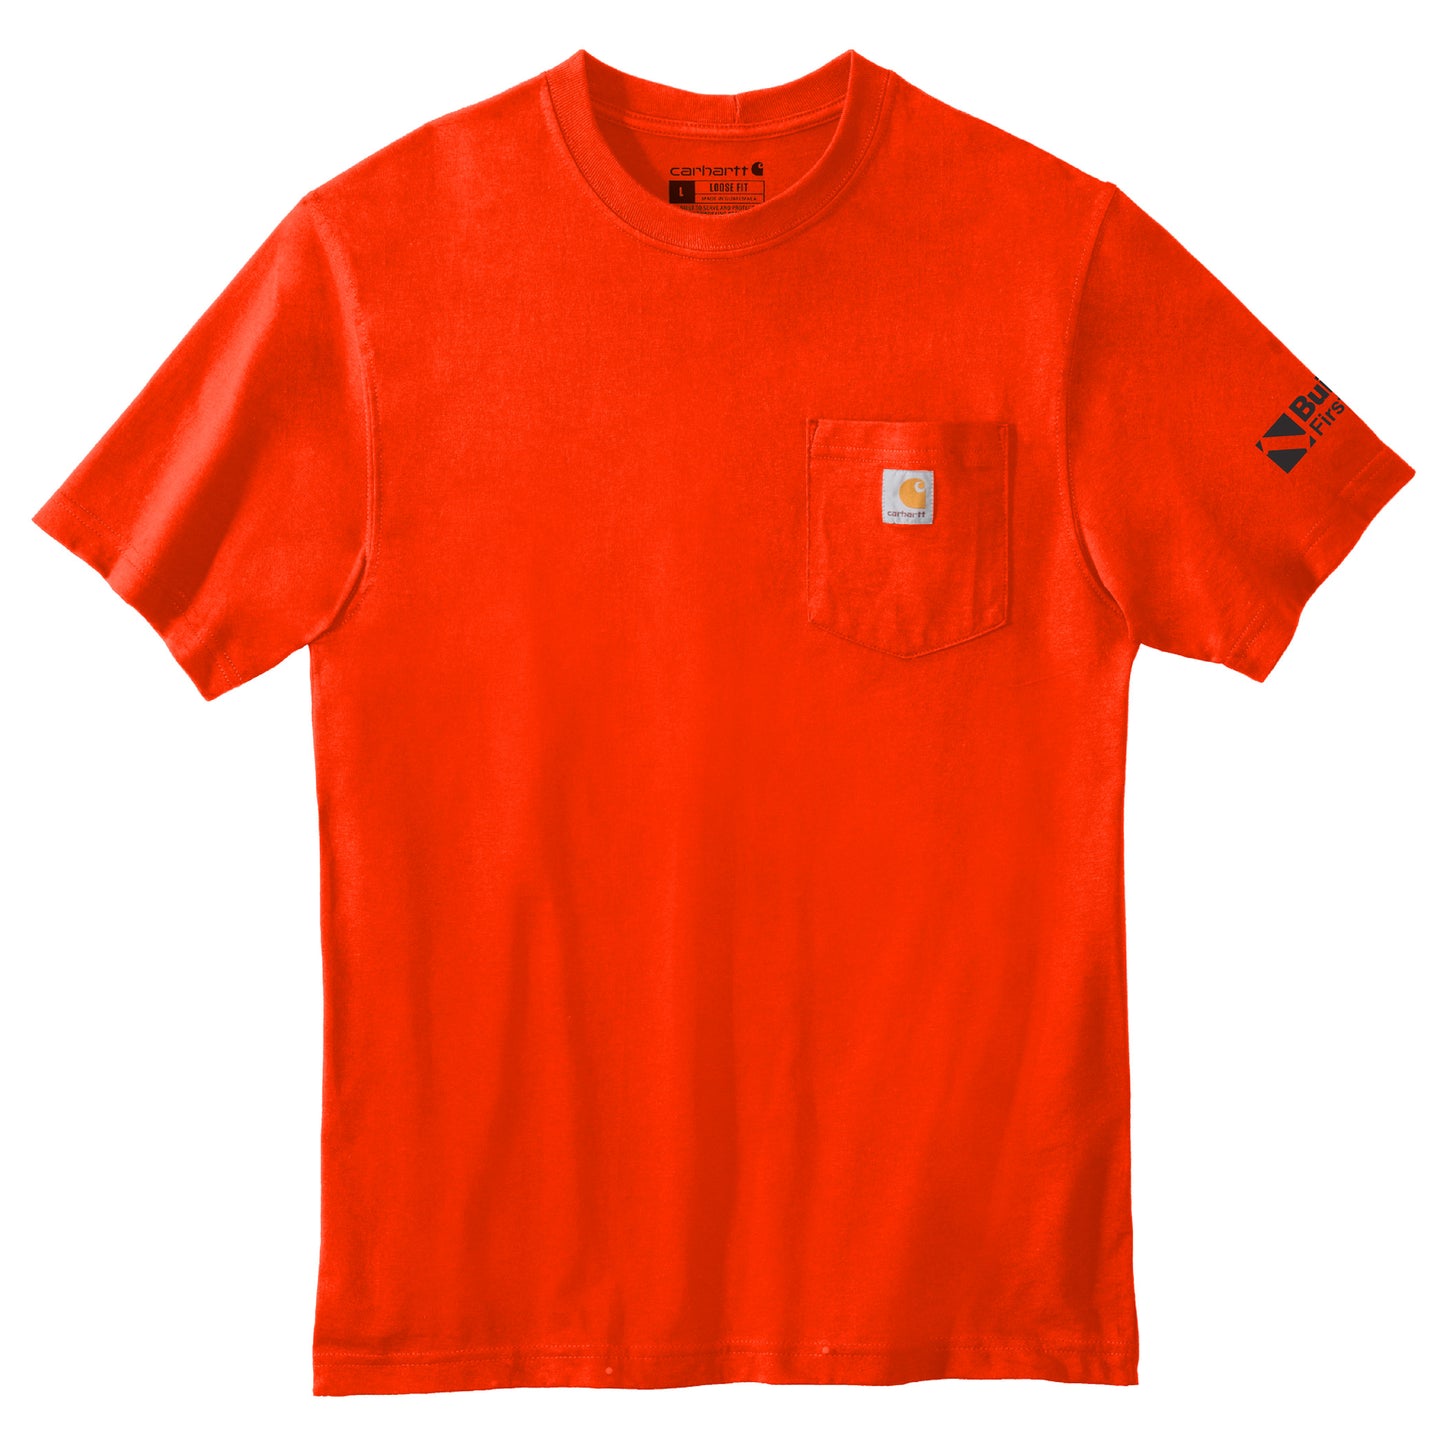 Carhartt Workwear Pocket Short Sleeve T-Shirt (Safety Version)